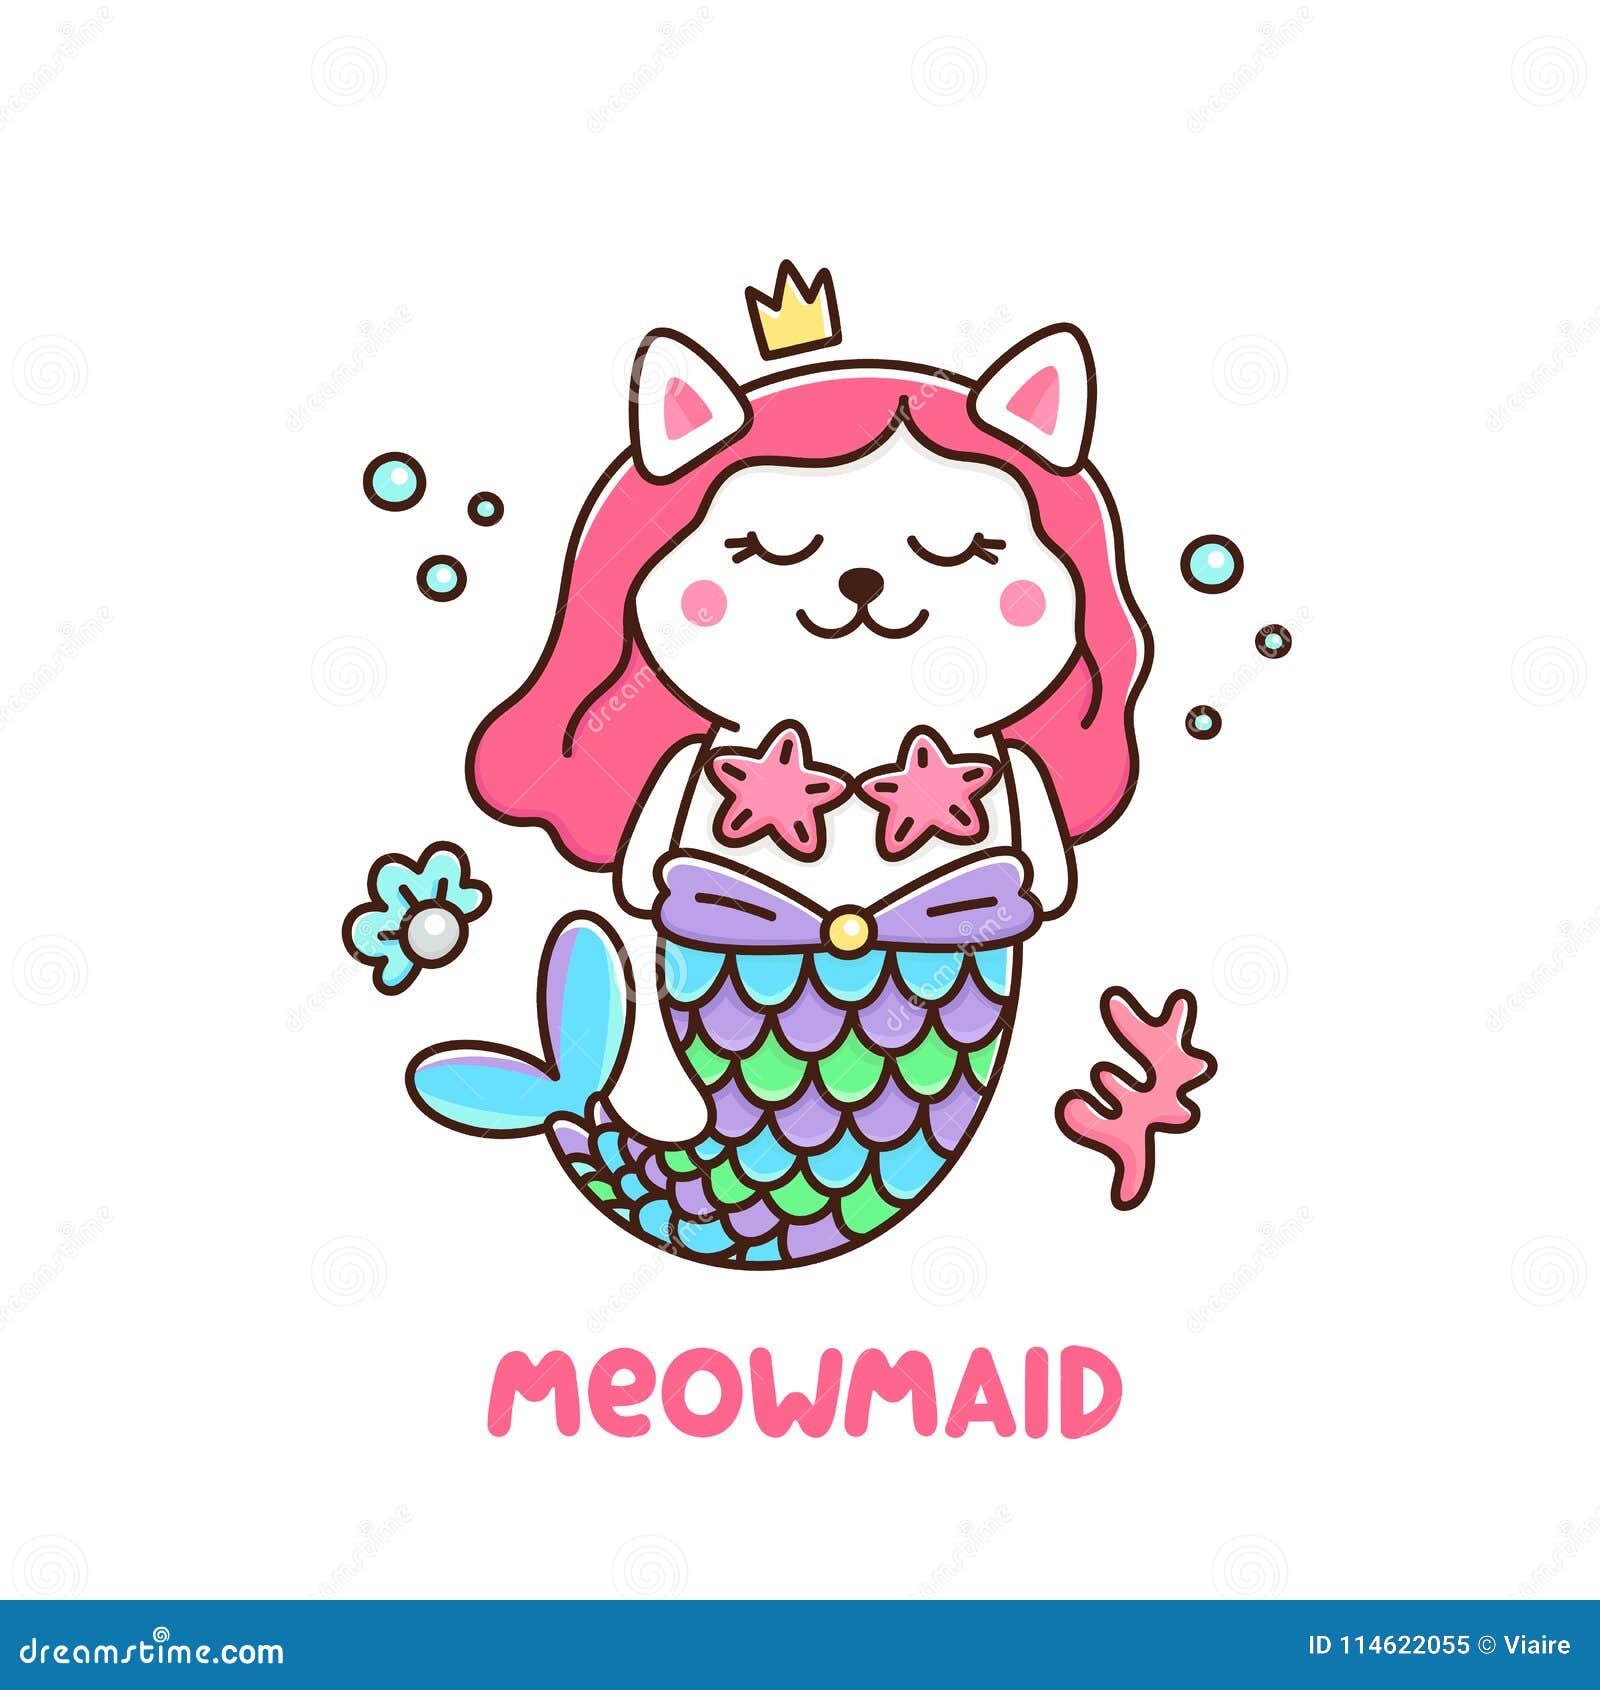 Meowmaid Cat Mermaid Funny Humor Purse Bag Hanger Holder Hook